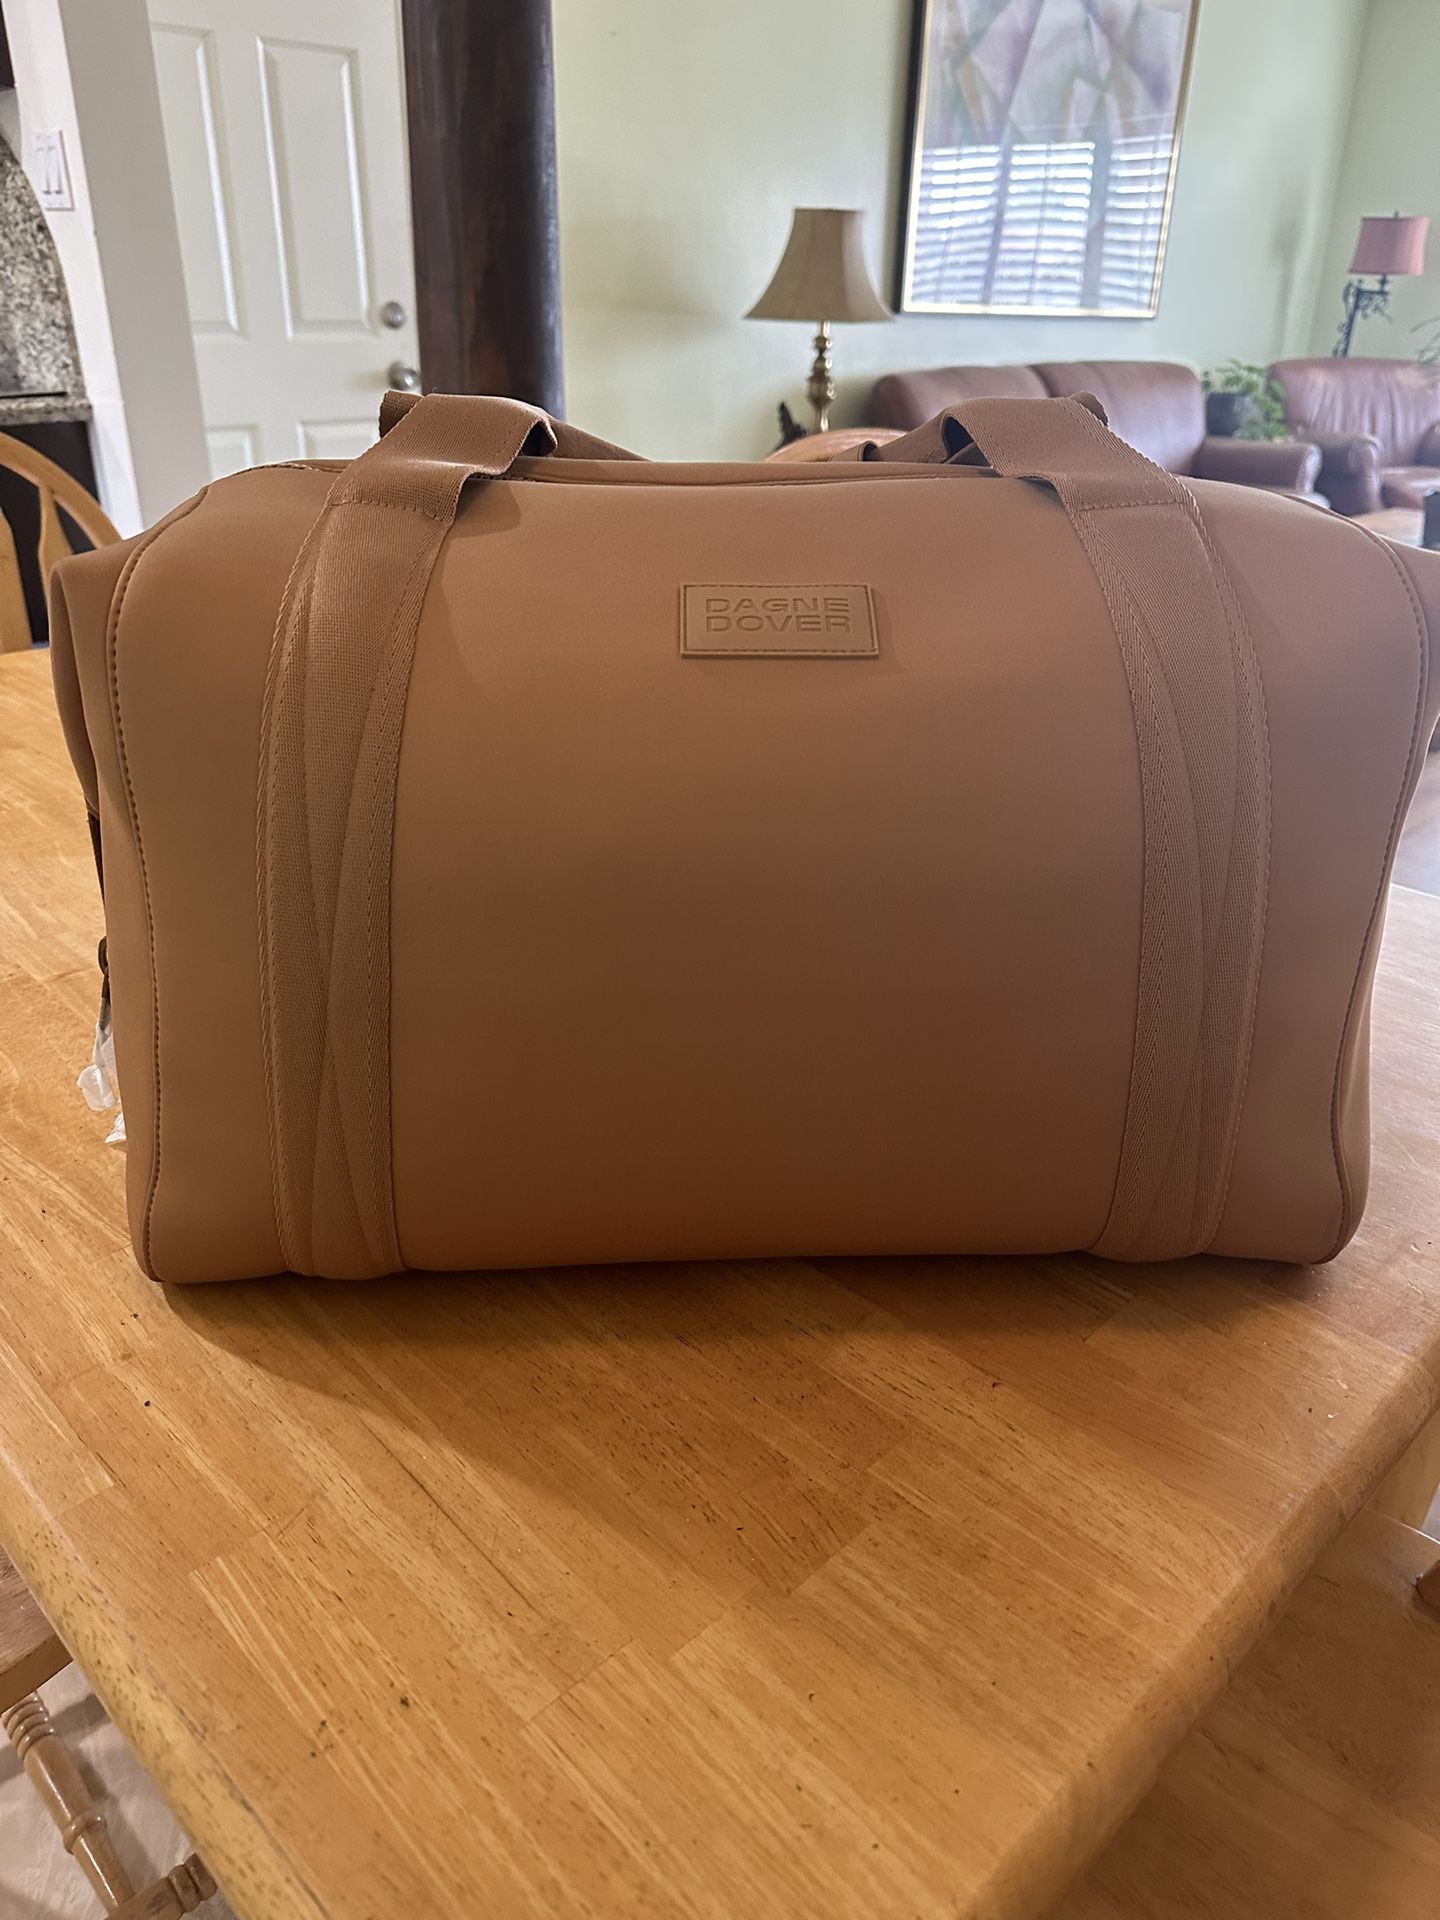 Dagne Dover Landon Carryall Bag XL for Sale in Los Angeles, CA - OfferUp